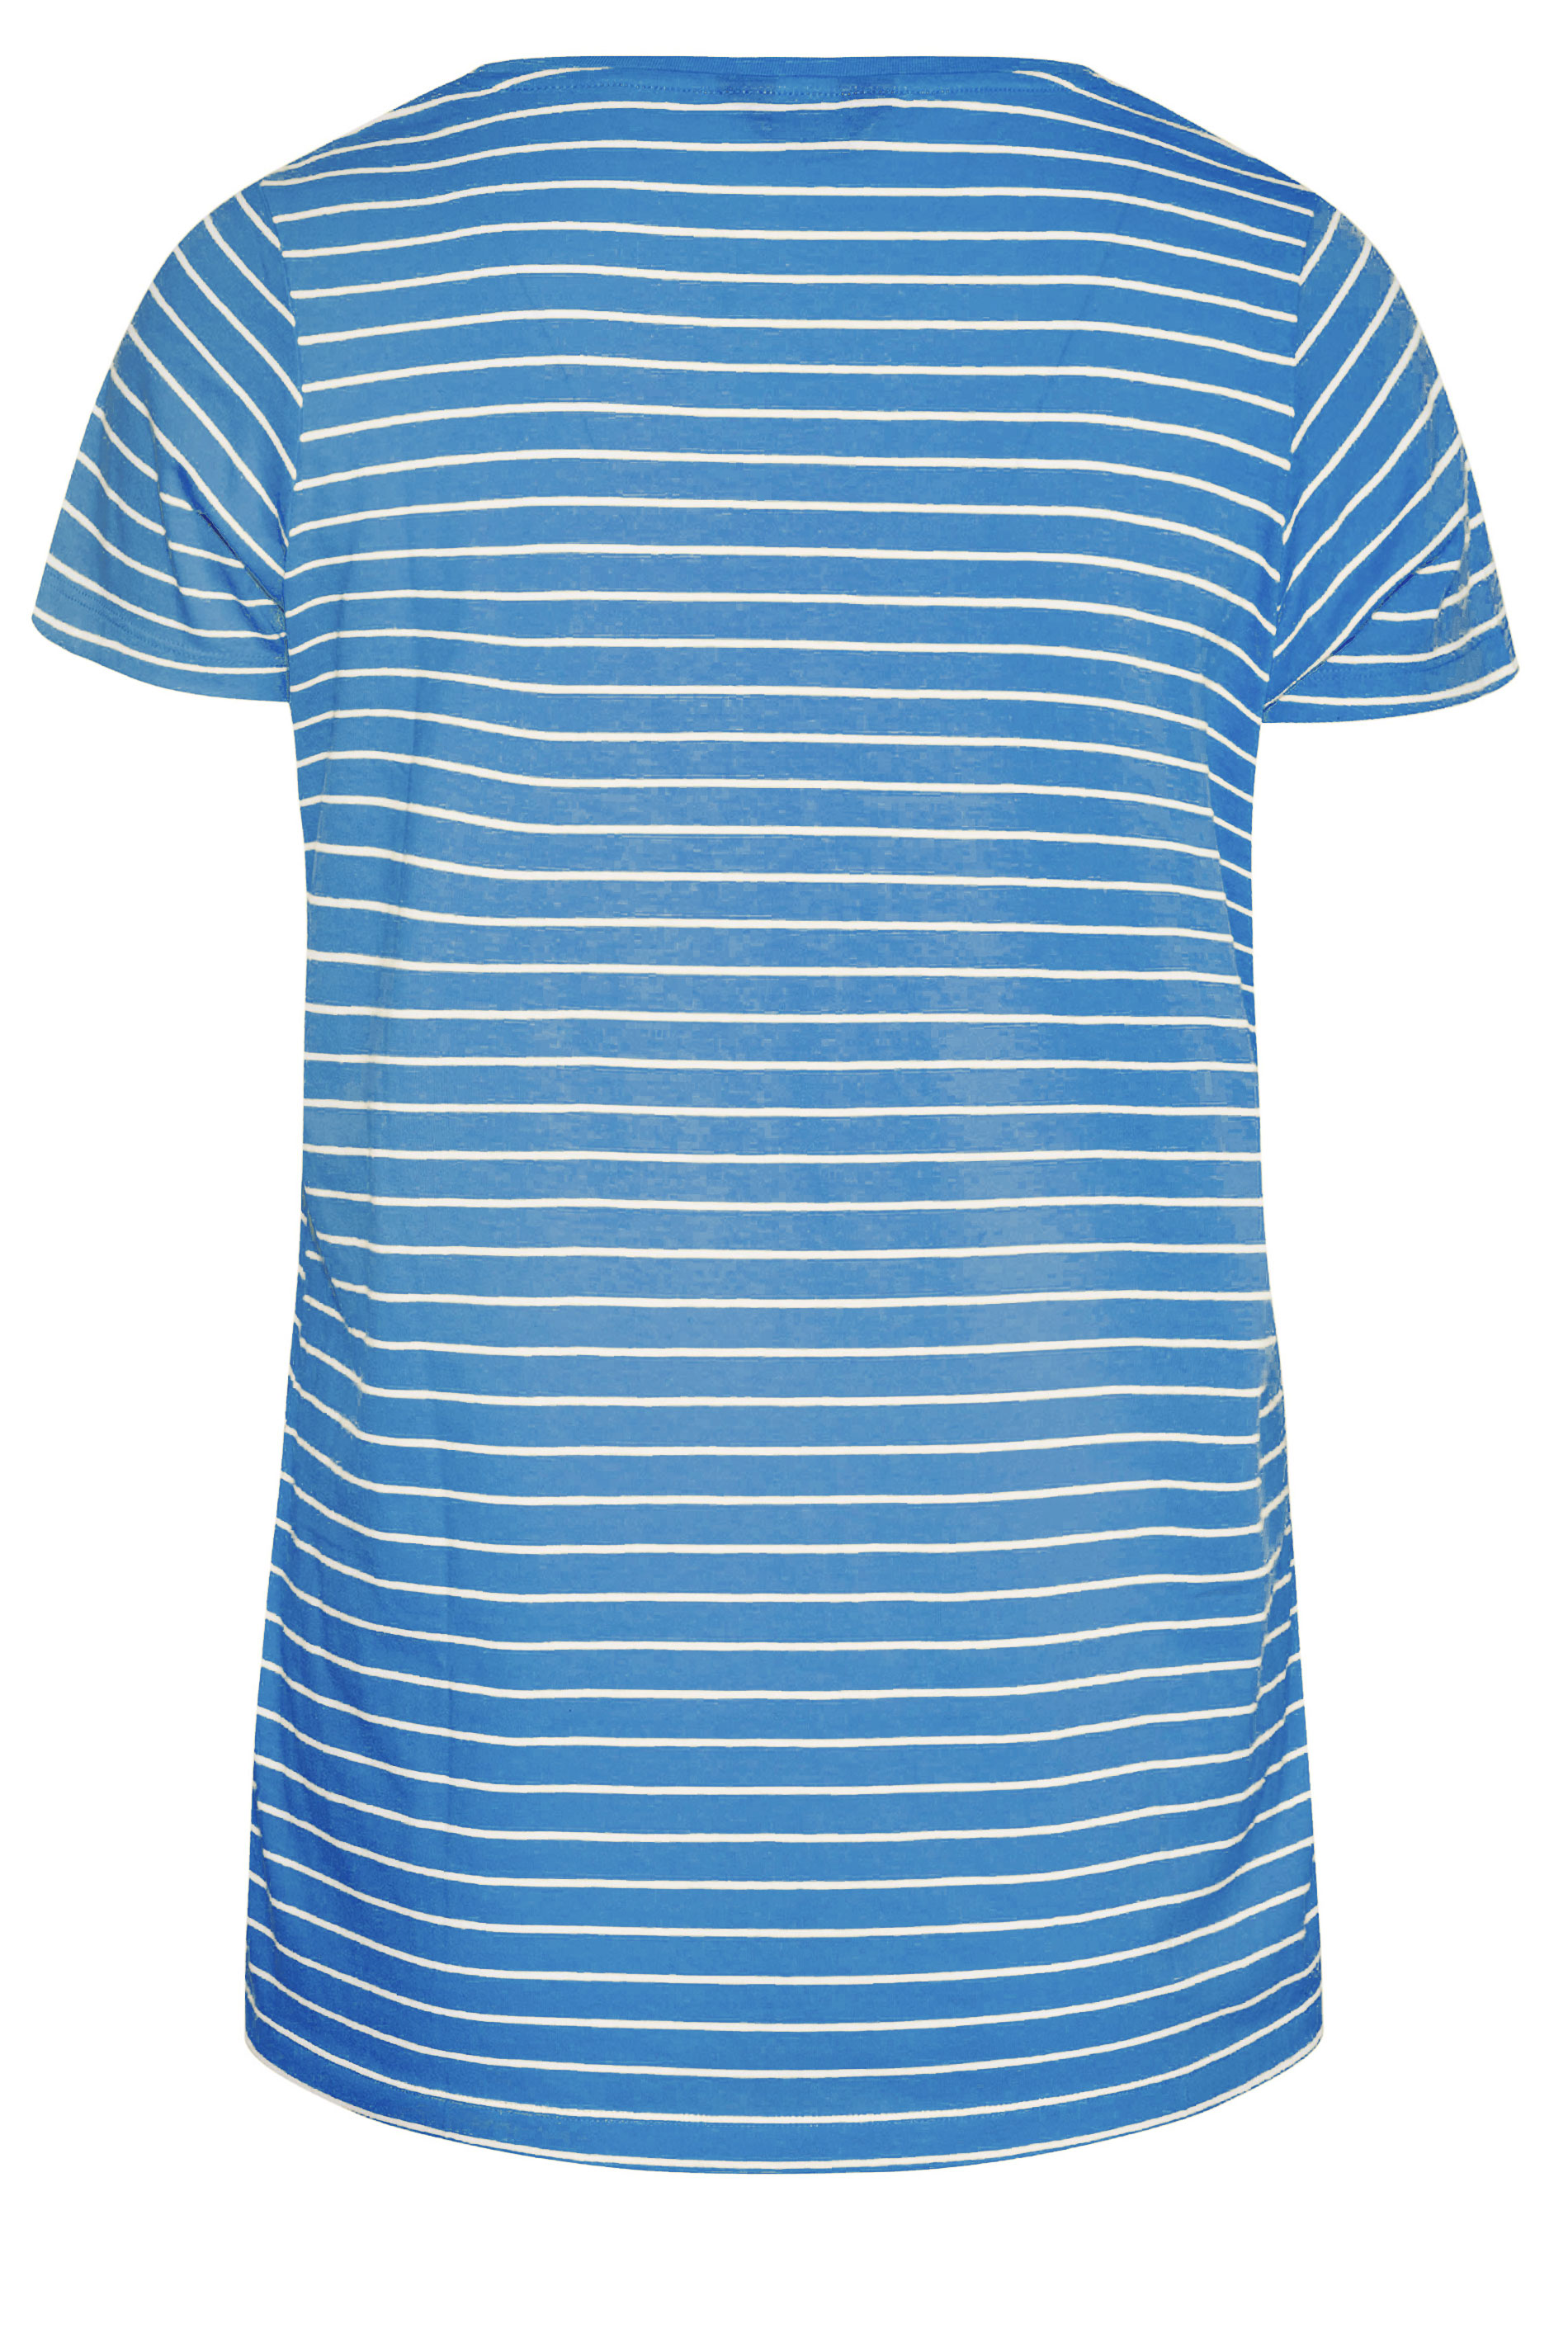 Grande taille  Tops Grande taille  T-Shirts | T-Shirt Bleu Fines Rayures - TT60850